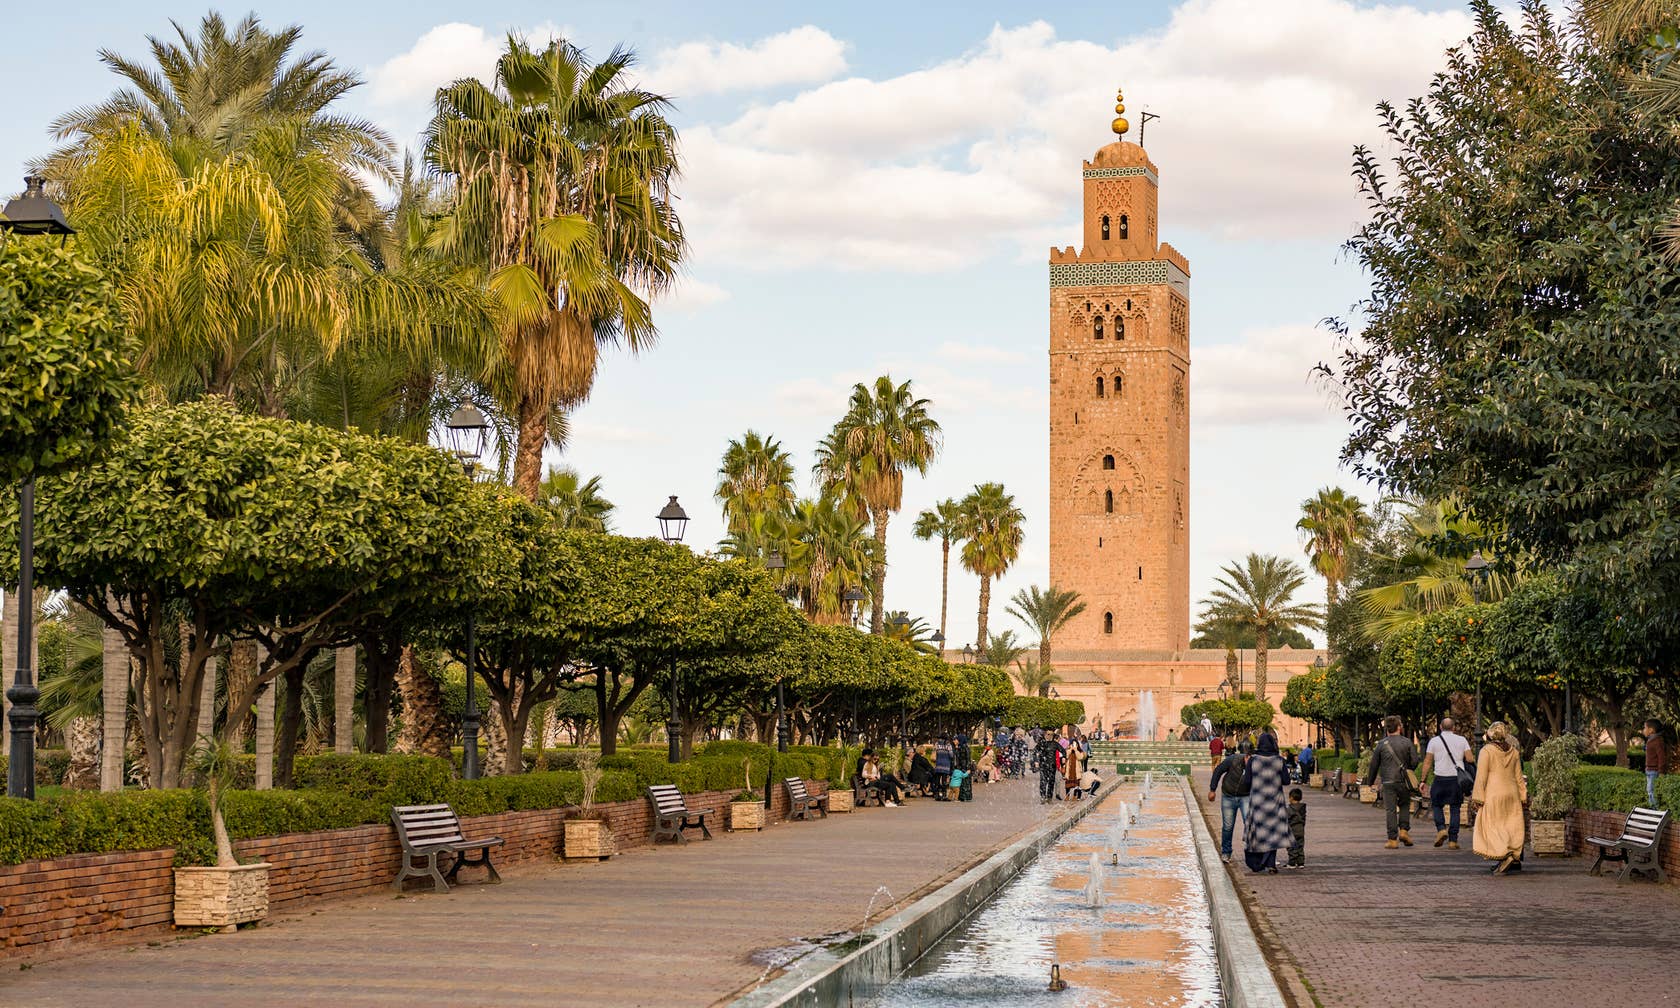 Vacation rentals in Morocco